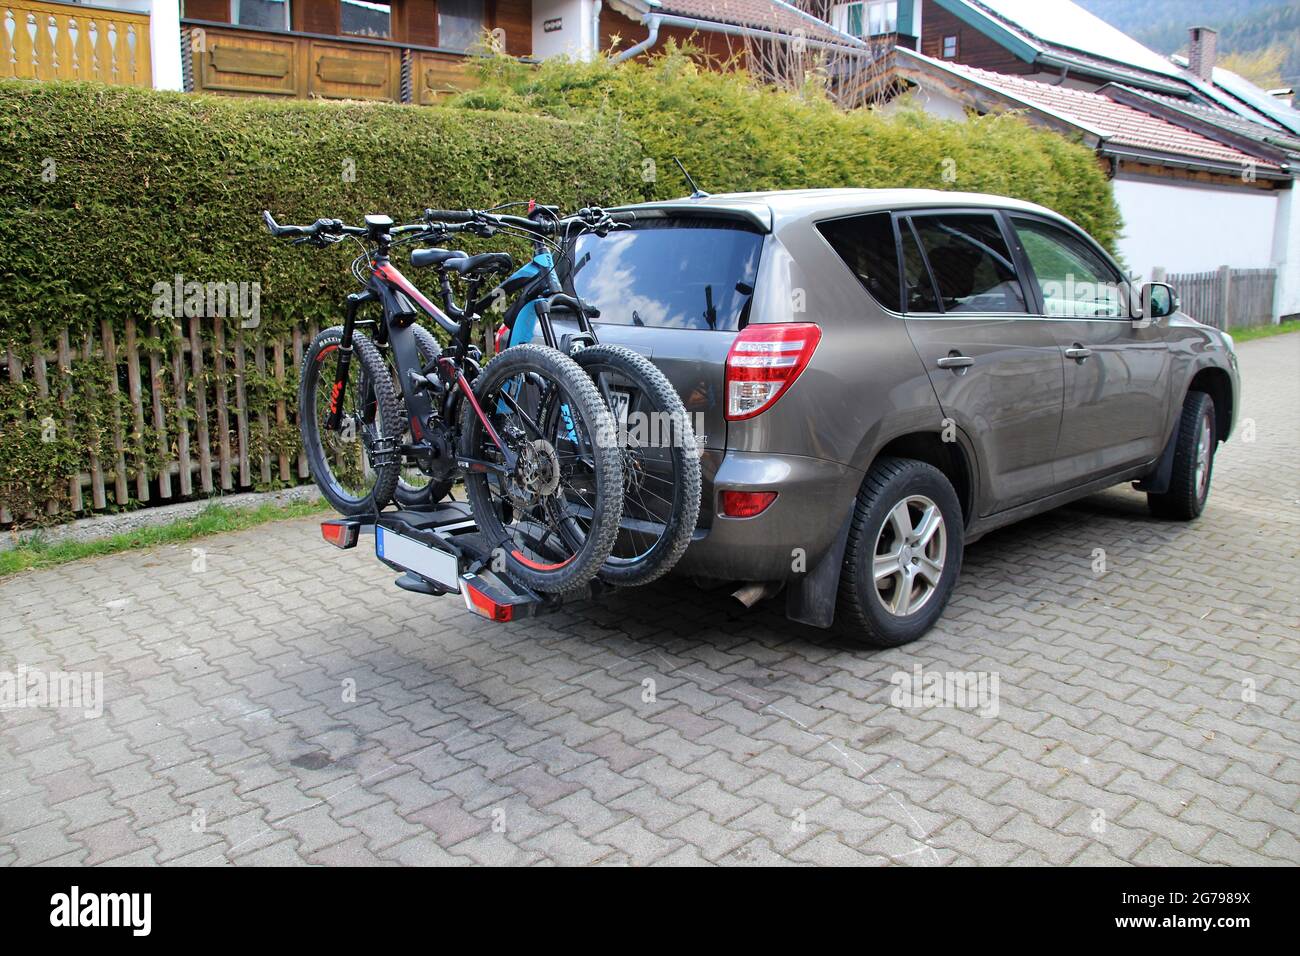 Car with bike rack, e-bike, e-bikes, Germany, Bavaria, Upper Bavaria, bicycle excursion Stock Photo